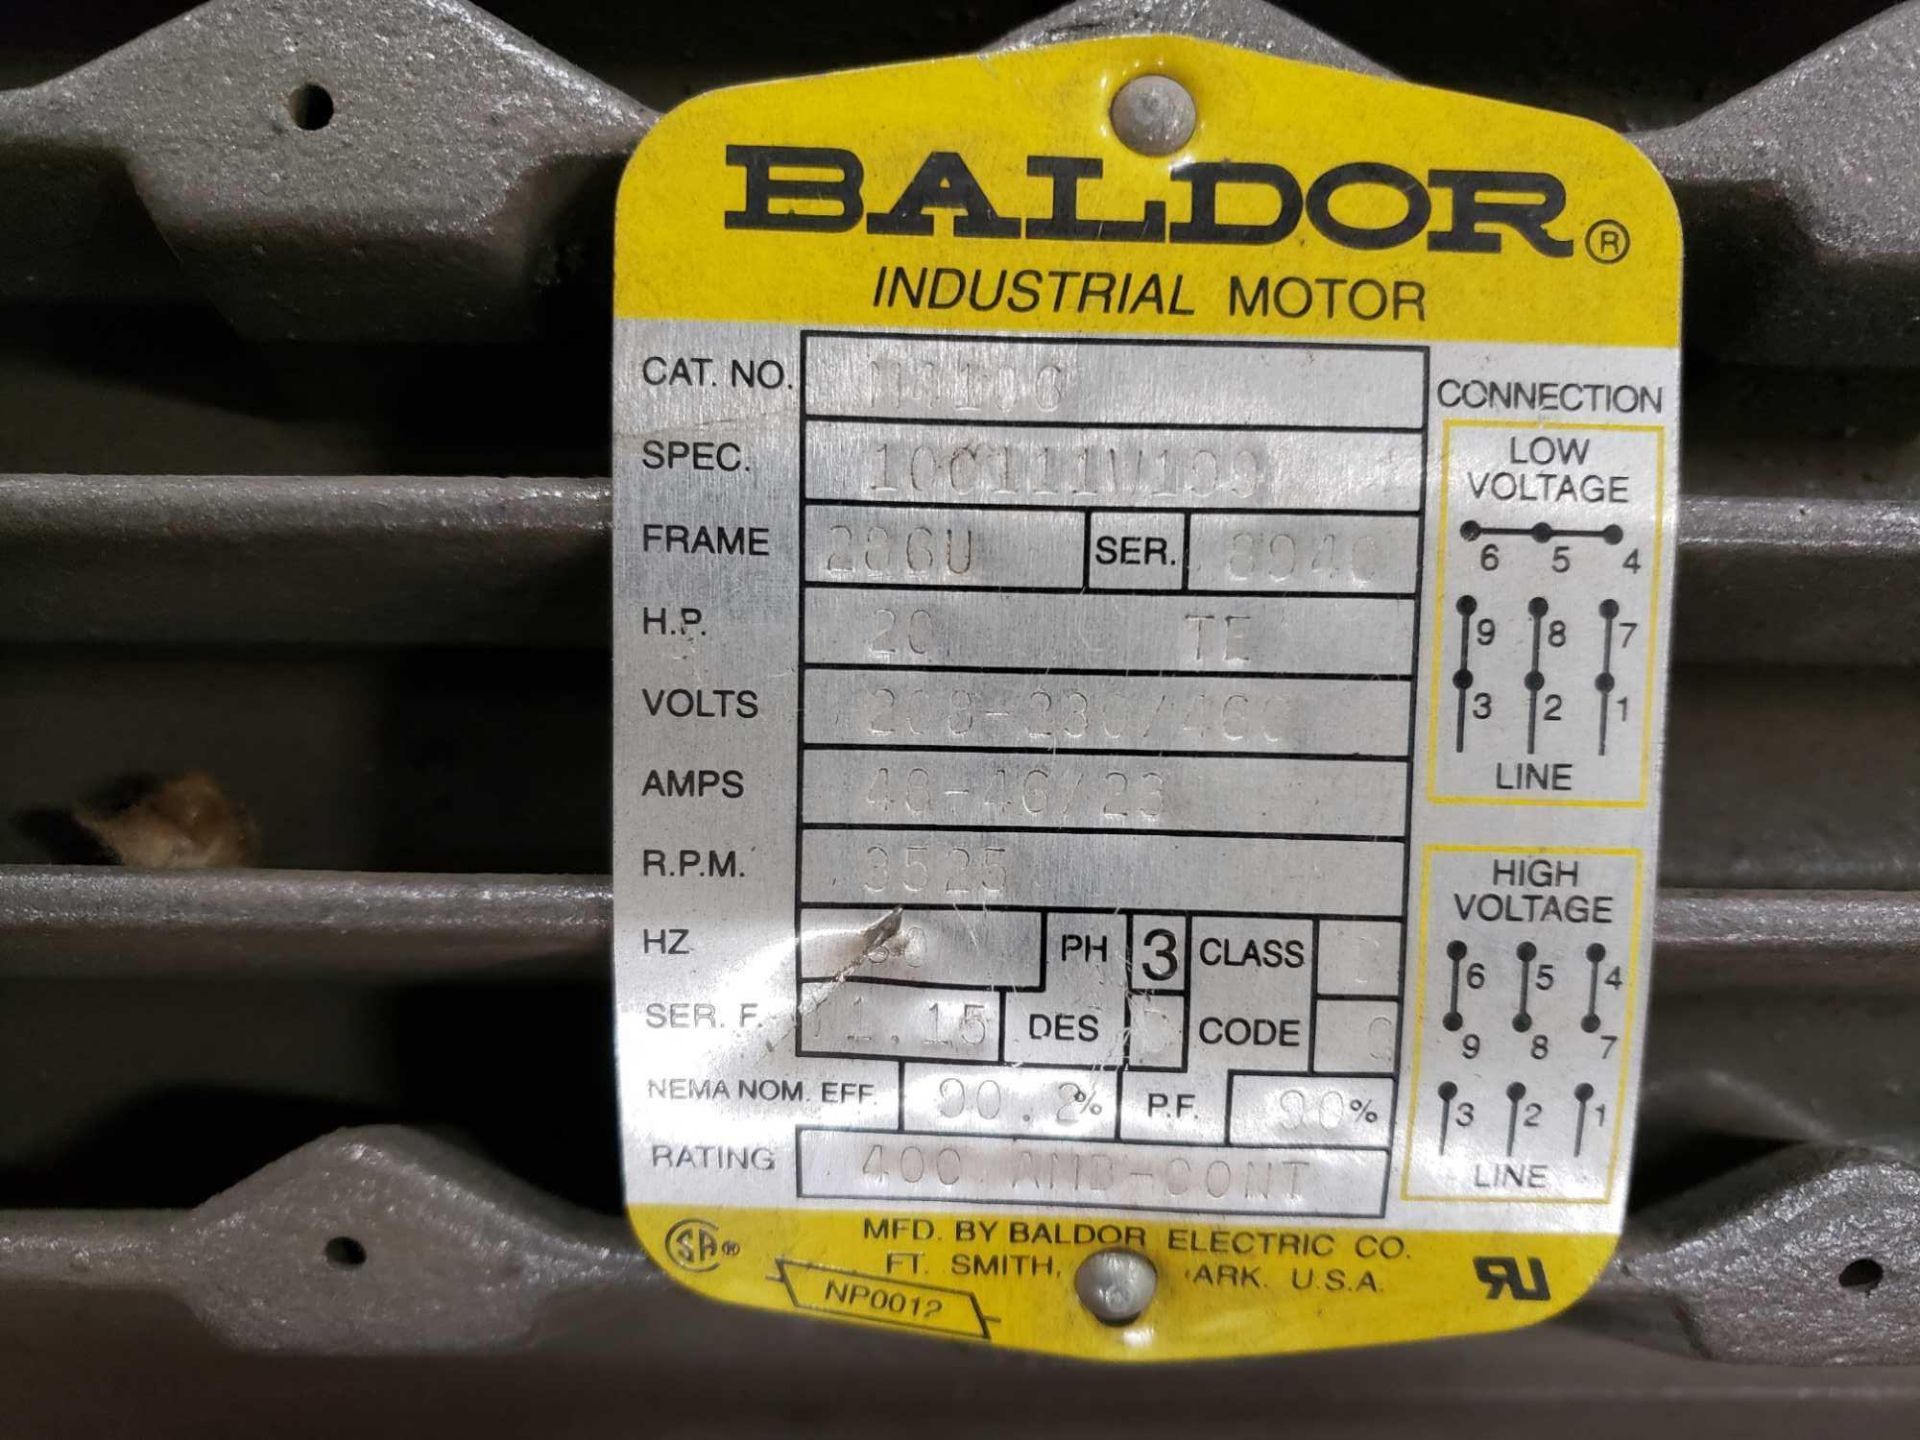 20hp Baldor motor model M4106. Frame 286U, 3525rpm, 208-230/460v 3 phase. New in box. - Image 2 of 4